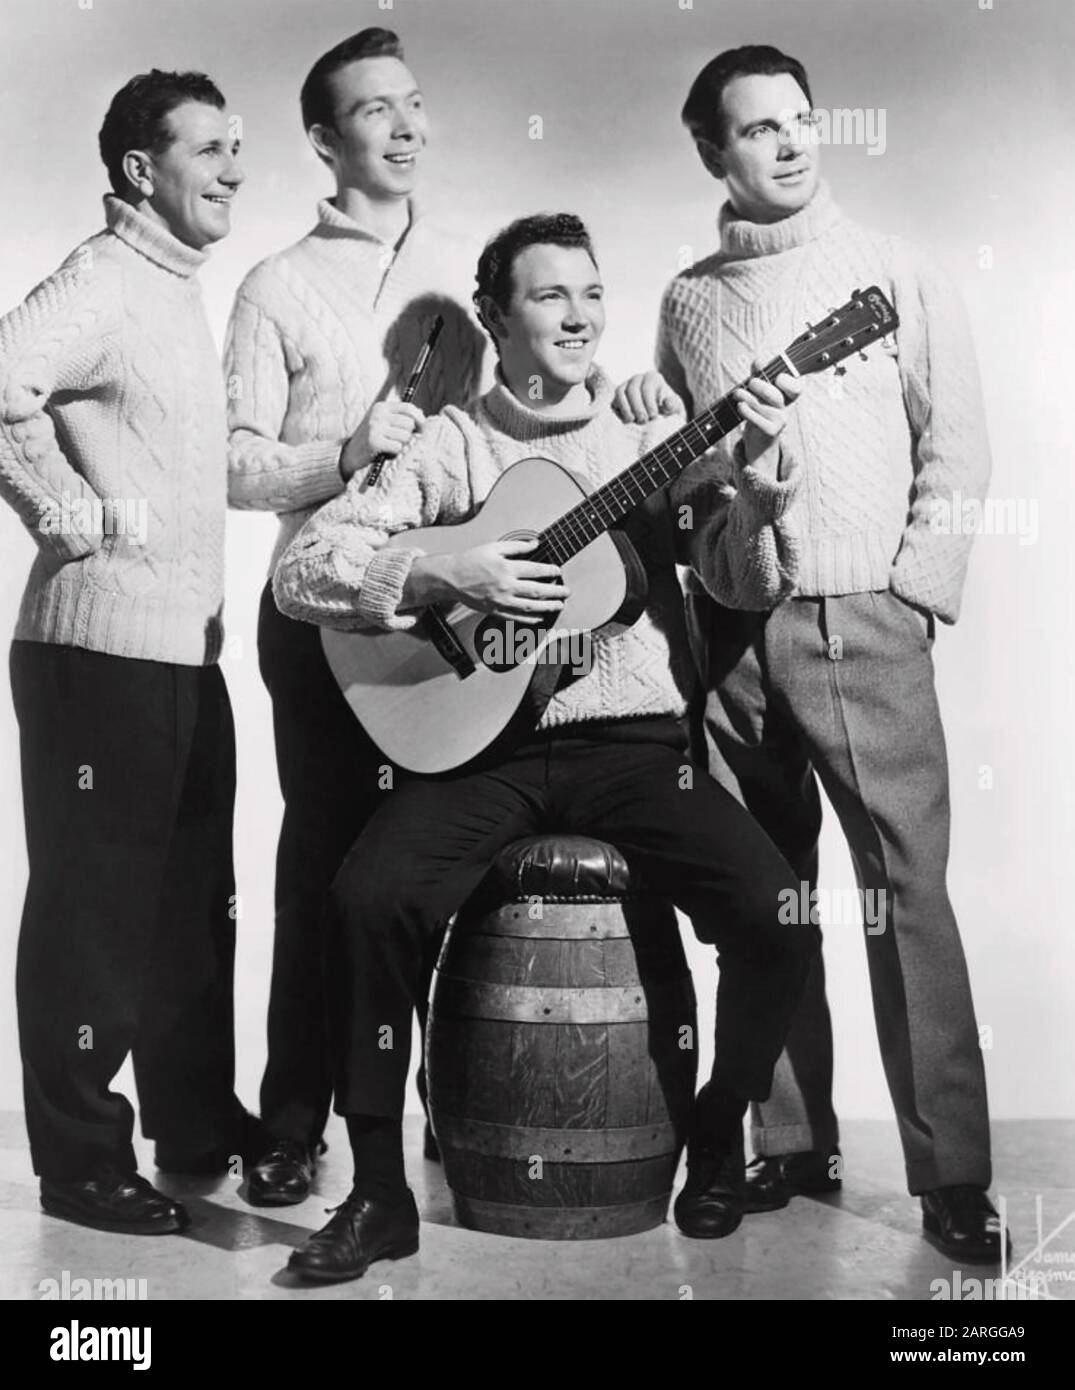 I FRATELLI CLANCY Foto promozionale del gruppo folk irlandese del 1960 Foto Stock